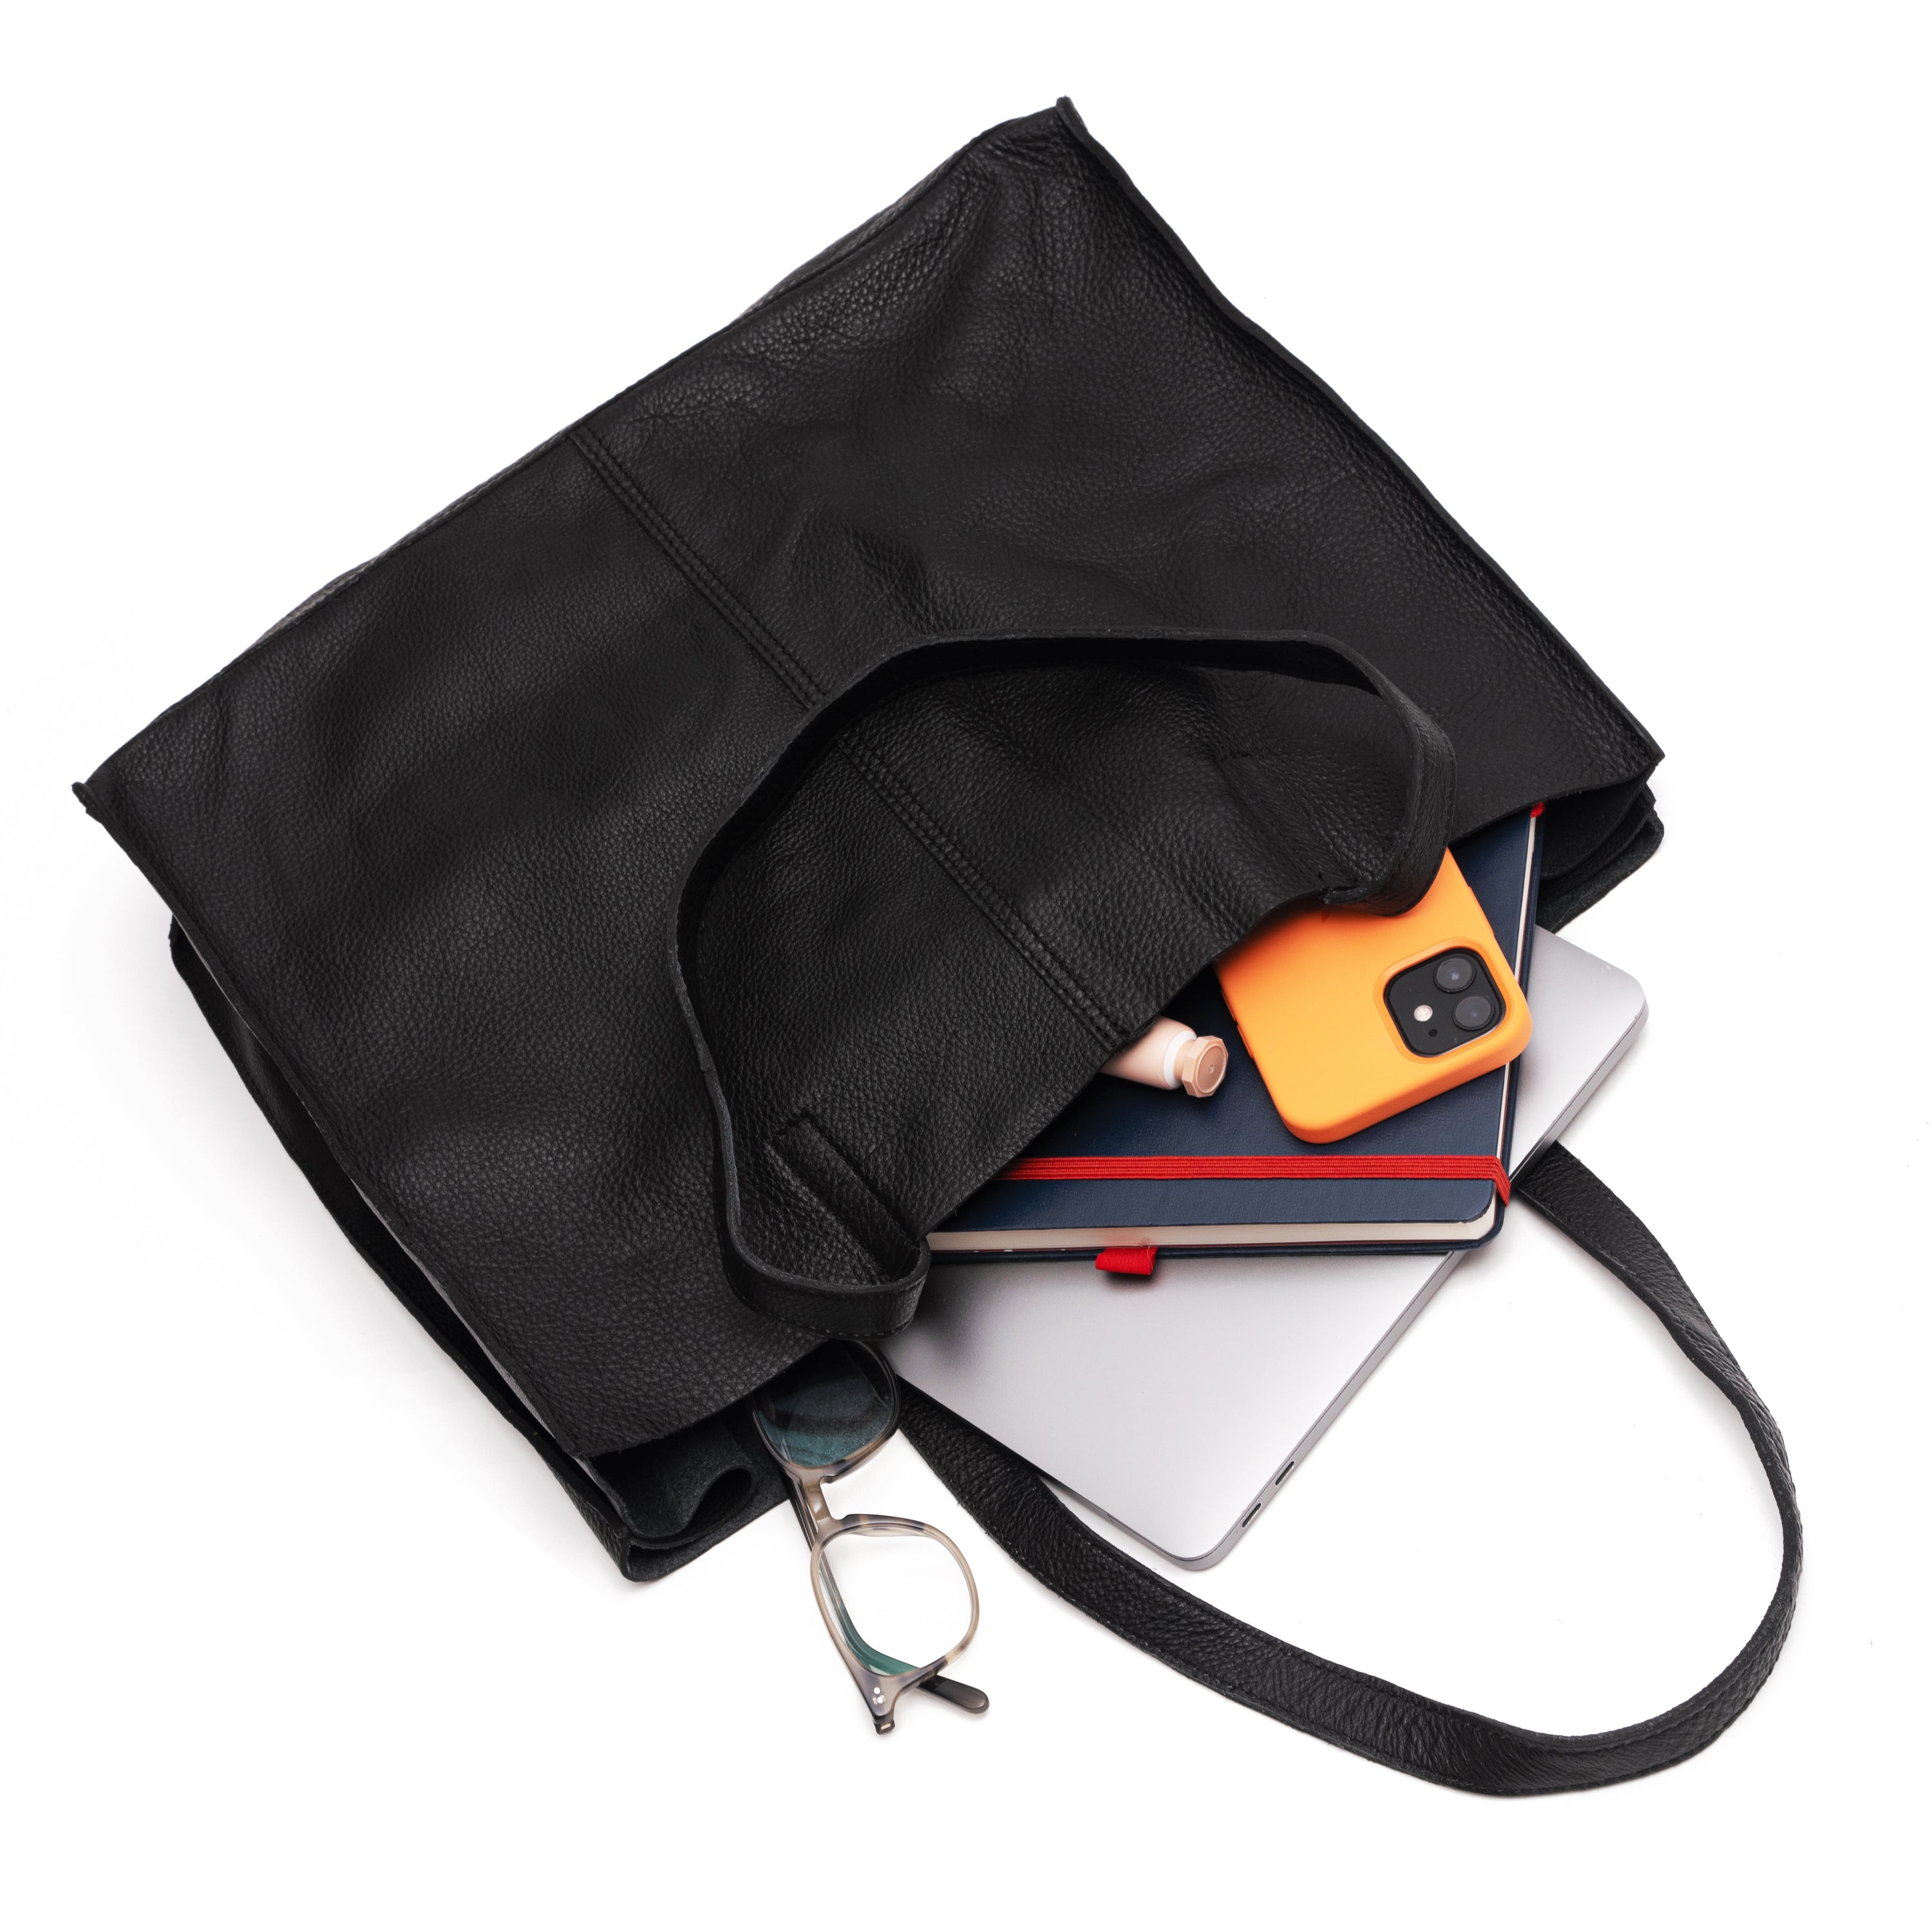 KomalC Leather Shoulder Bag Tote for Women Purse Satchel Travel Bag sh